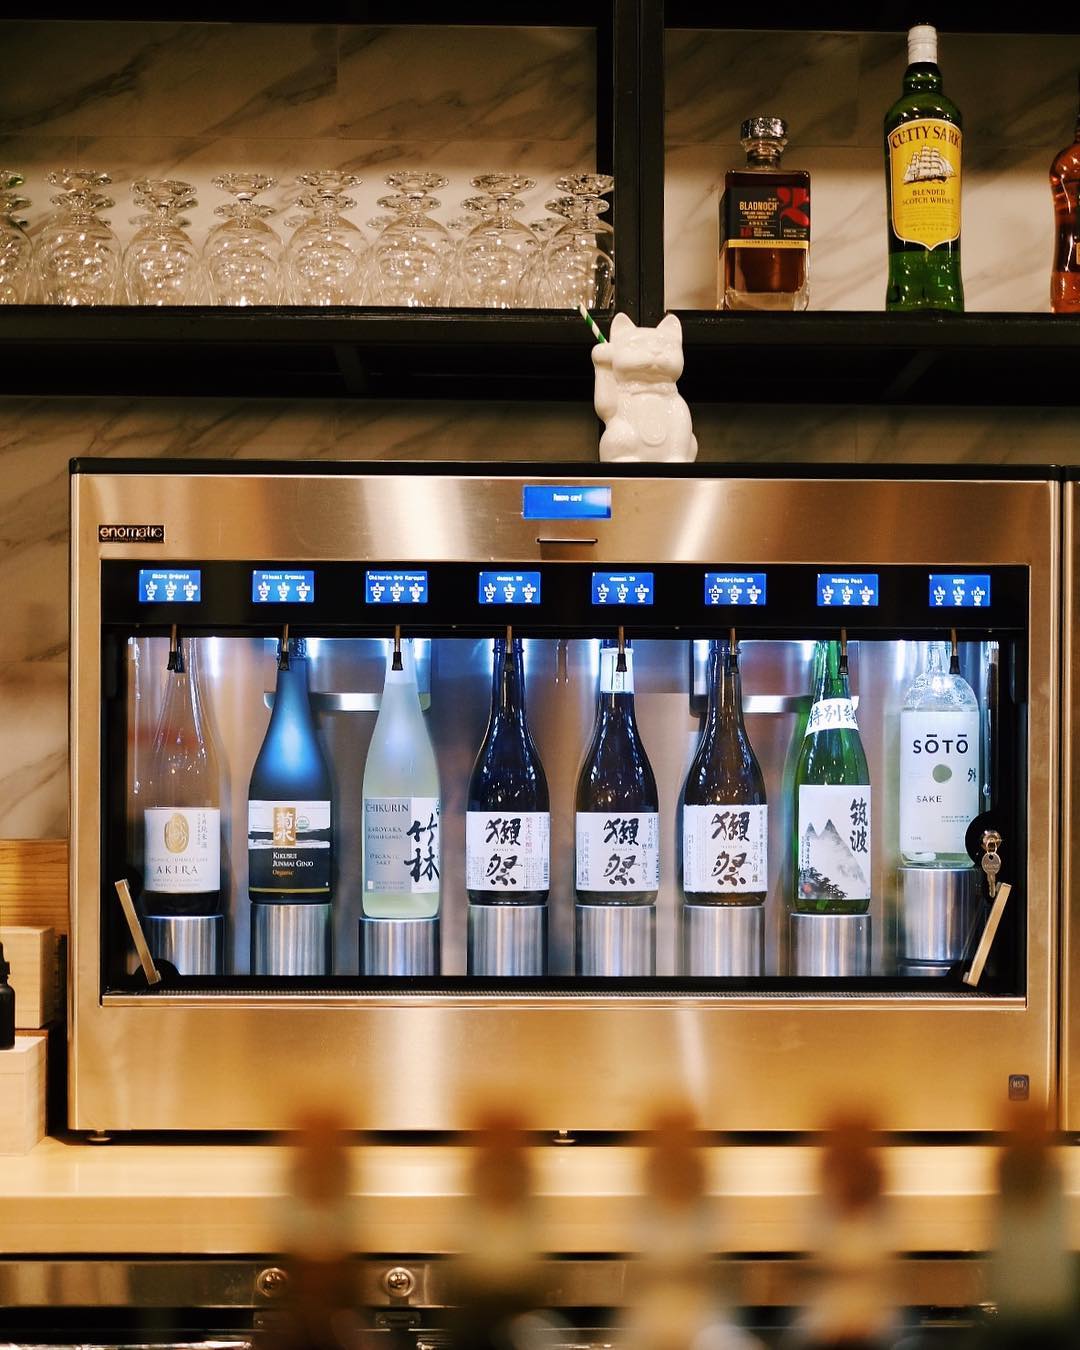 Enomatic dispensers preserve Sake too!